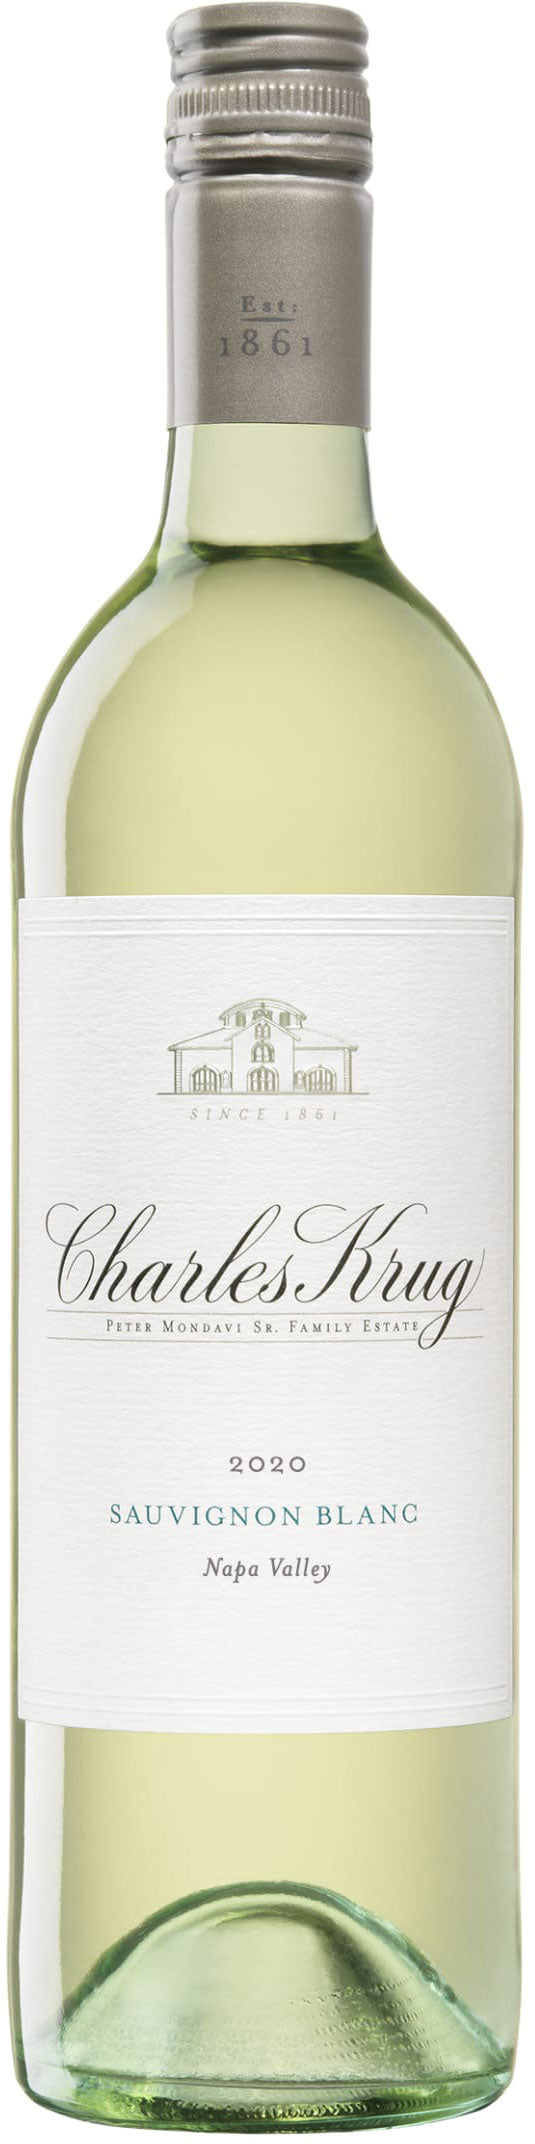 Charles Krug Sauvignon Blanc 2020